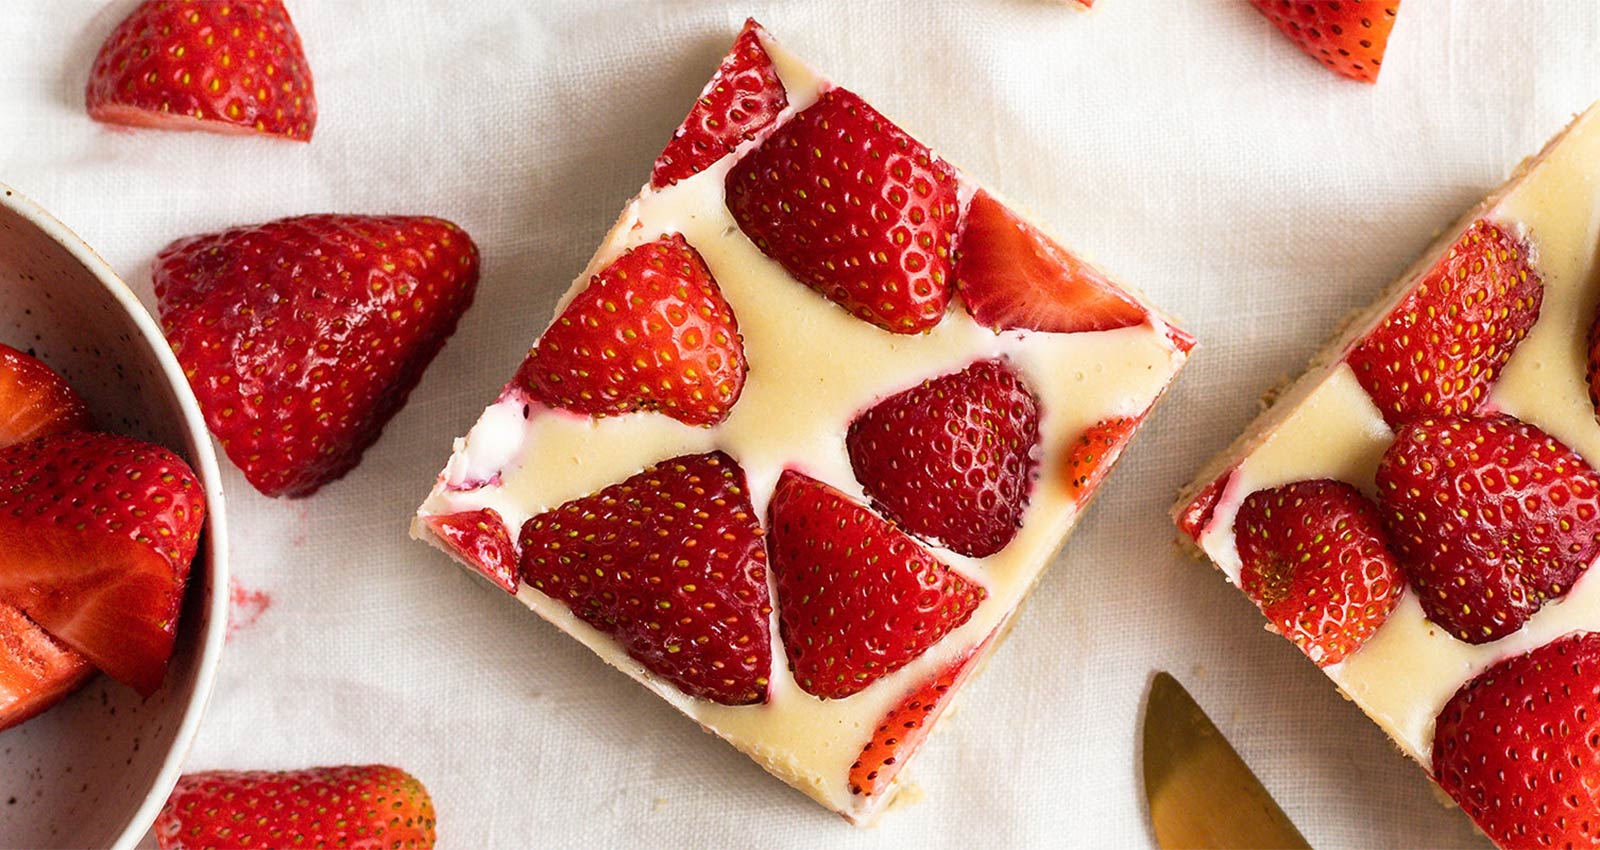 Strawberry cheesecake bars with lots of fresh strawberries